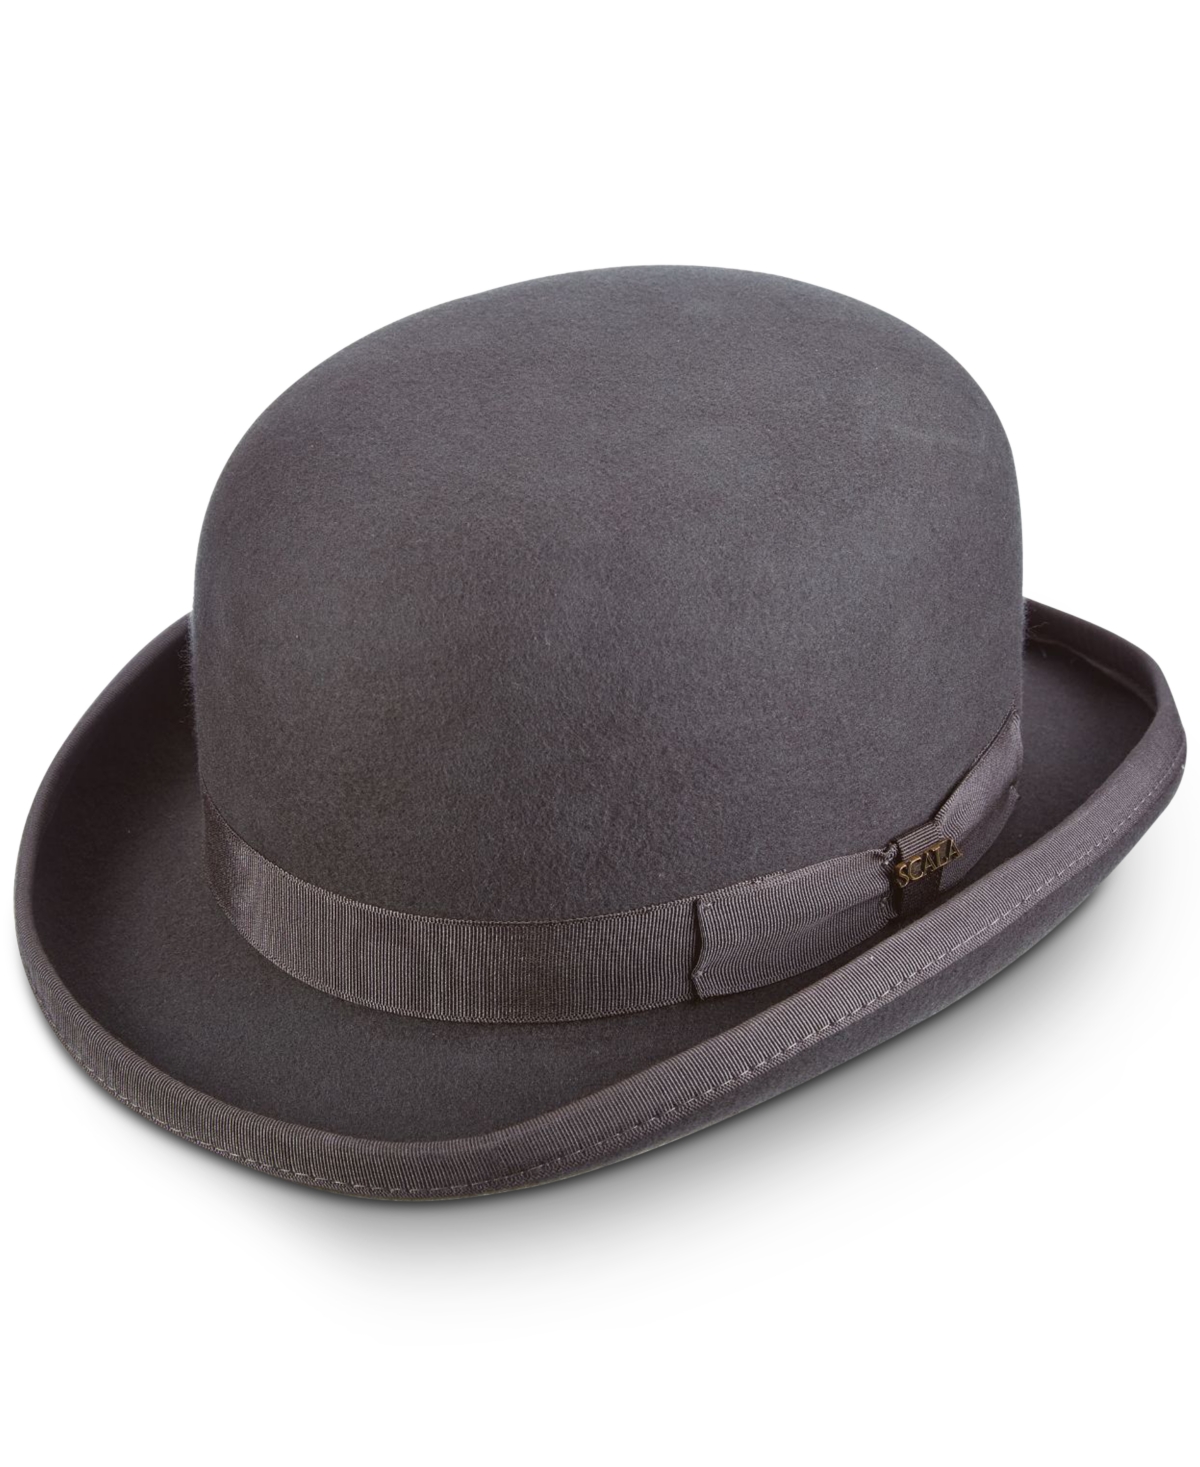 Men's Wool Bowler Hat - Char